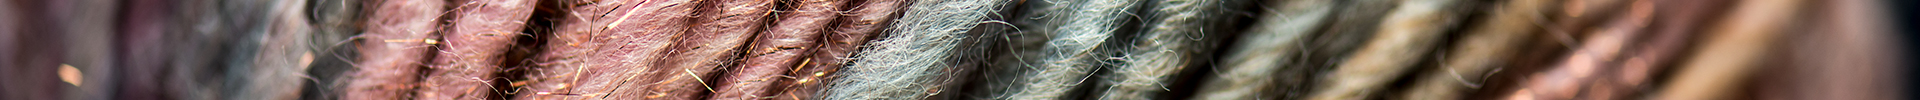 vendita lana on line | filati lana in rocche | gomitoli di lana merinos | filati naturali online